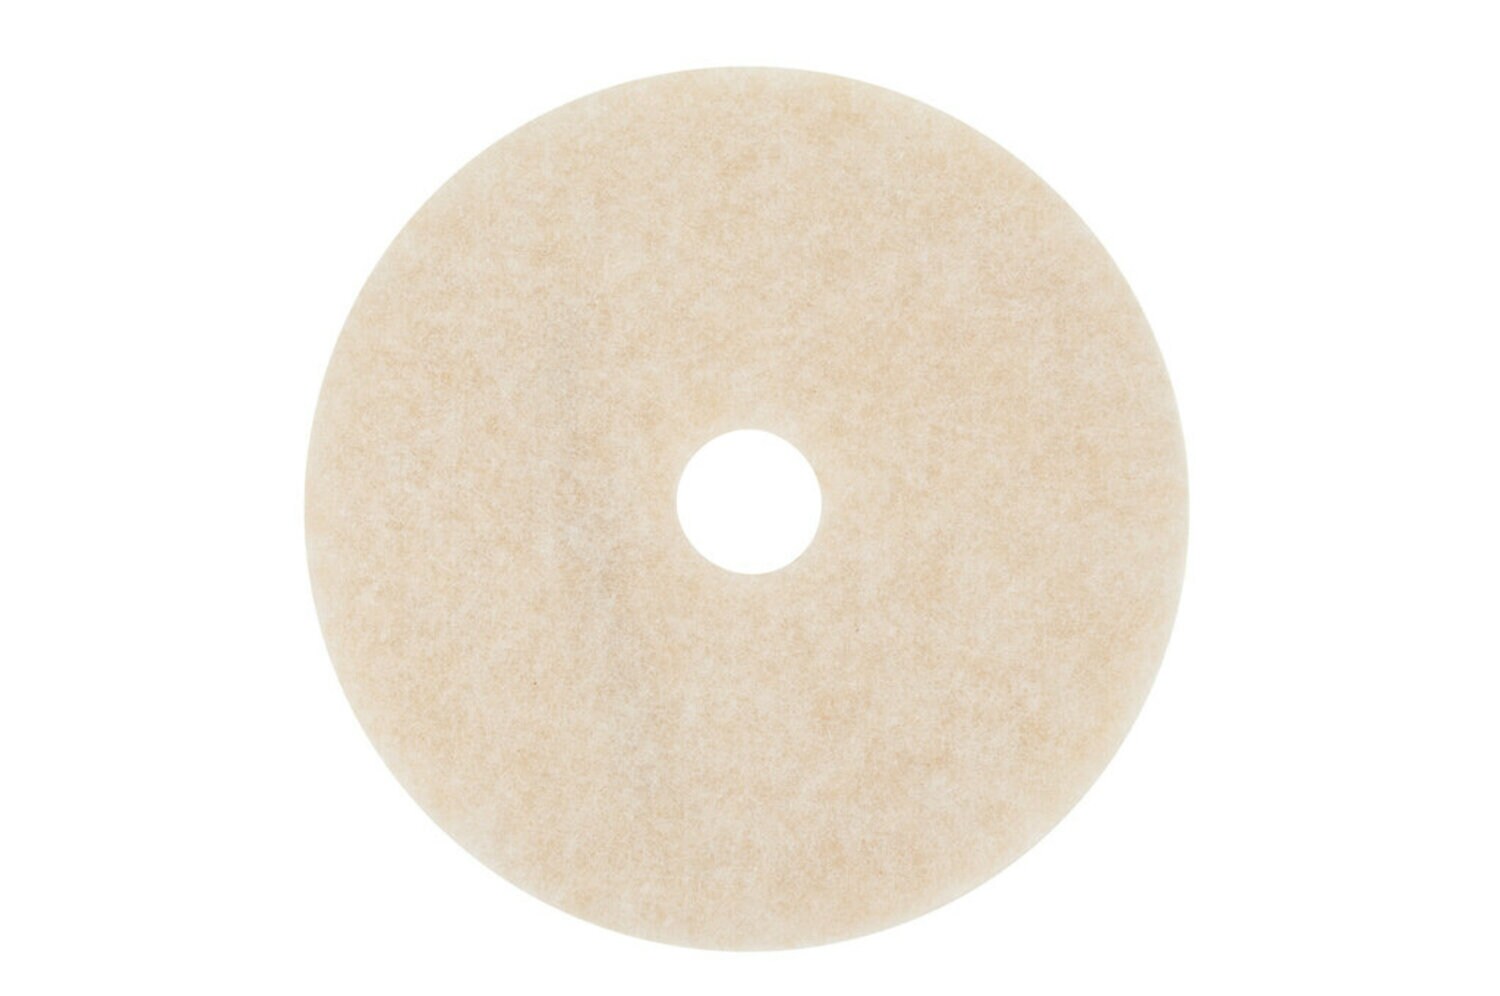 7100001578 - Scotch-Brite Burnish Floor Pads 3200, White/Umber, 432 mm x 82 mm, 17
in, 5 ea/Case